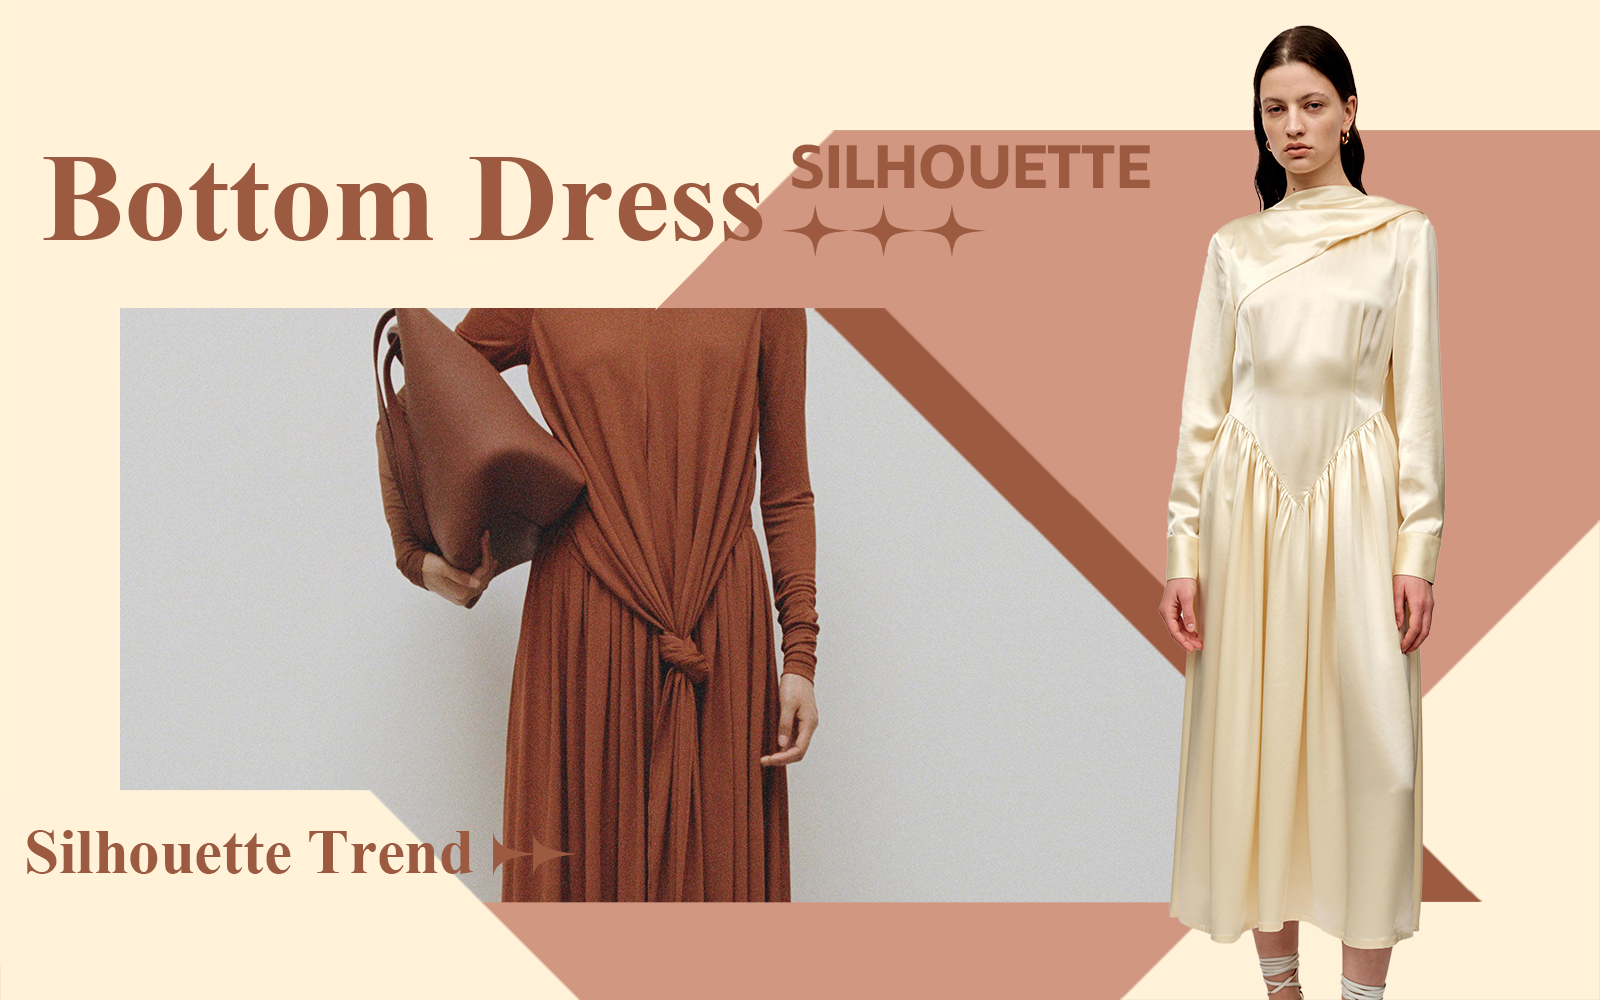 The Silhouette Trend for Women's Bottom Dress